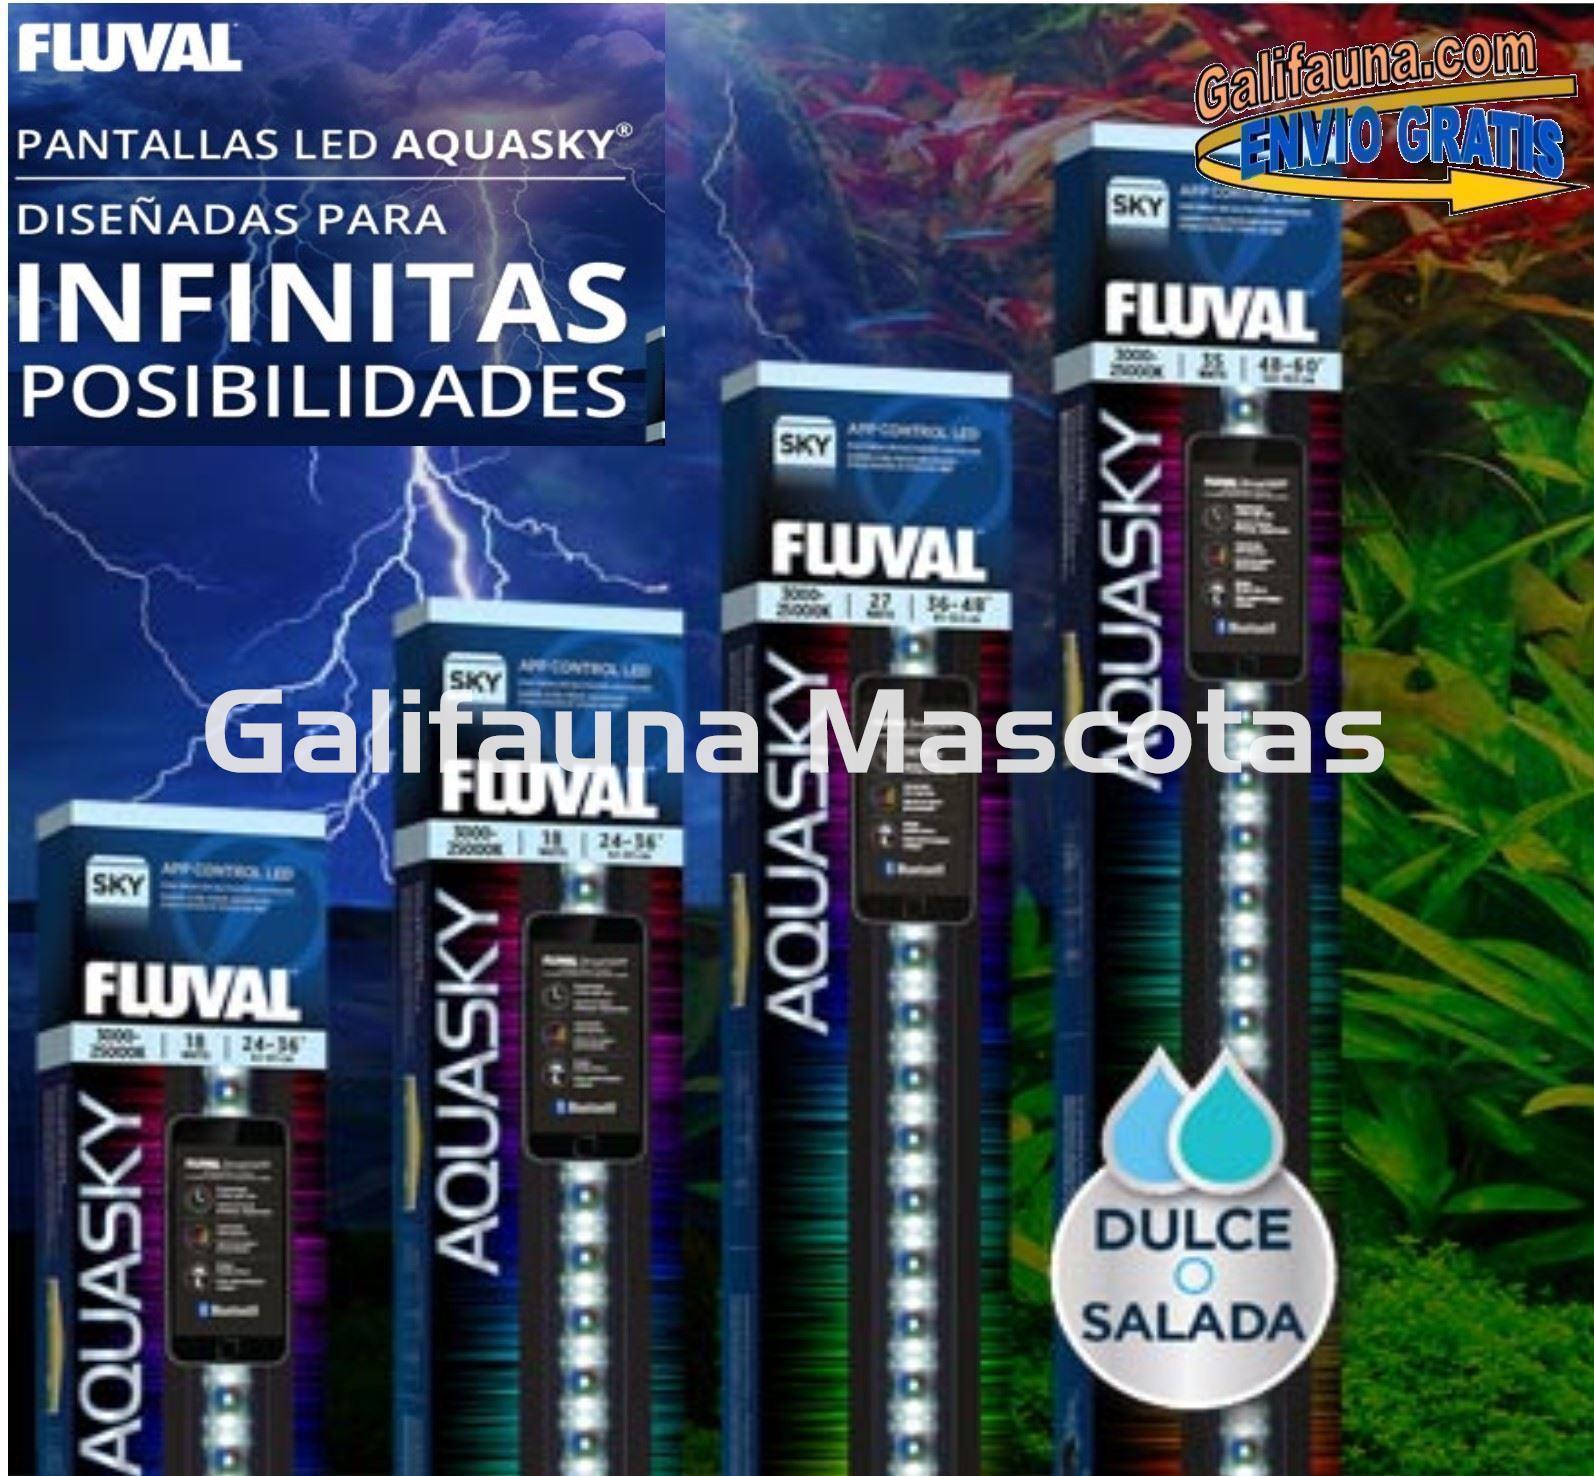 PANTALLA LED BLUETOOTH FLUVAL AQUASKY LED. Conexión APP Fluval y Brazos extensibles. - Imagen 1